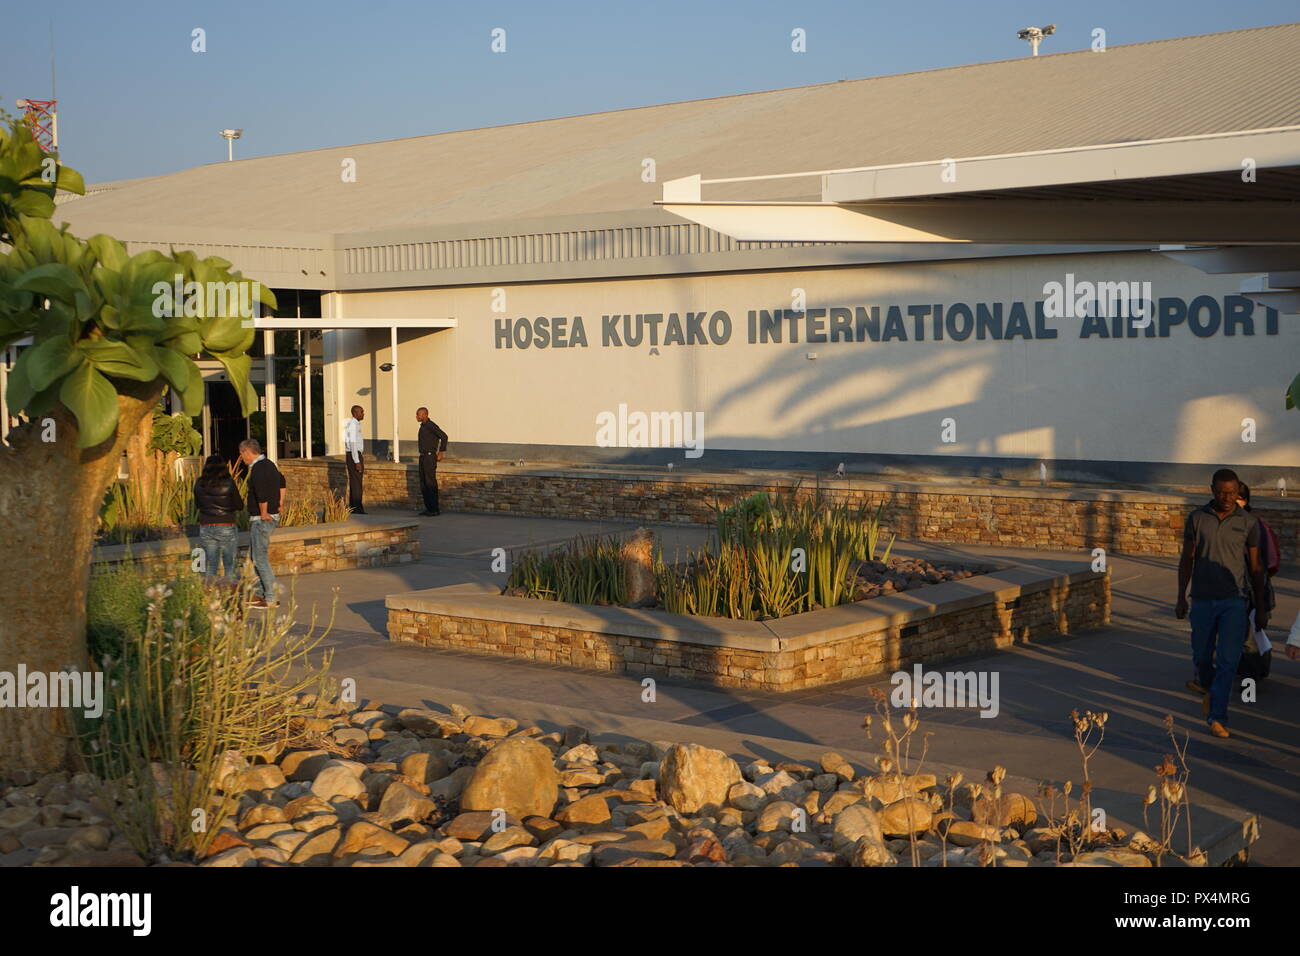 Internationaler Flughafen Osea, Kutako Windhoek, in Namibia Foto Stock